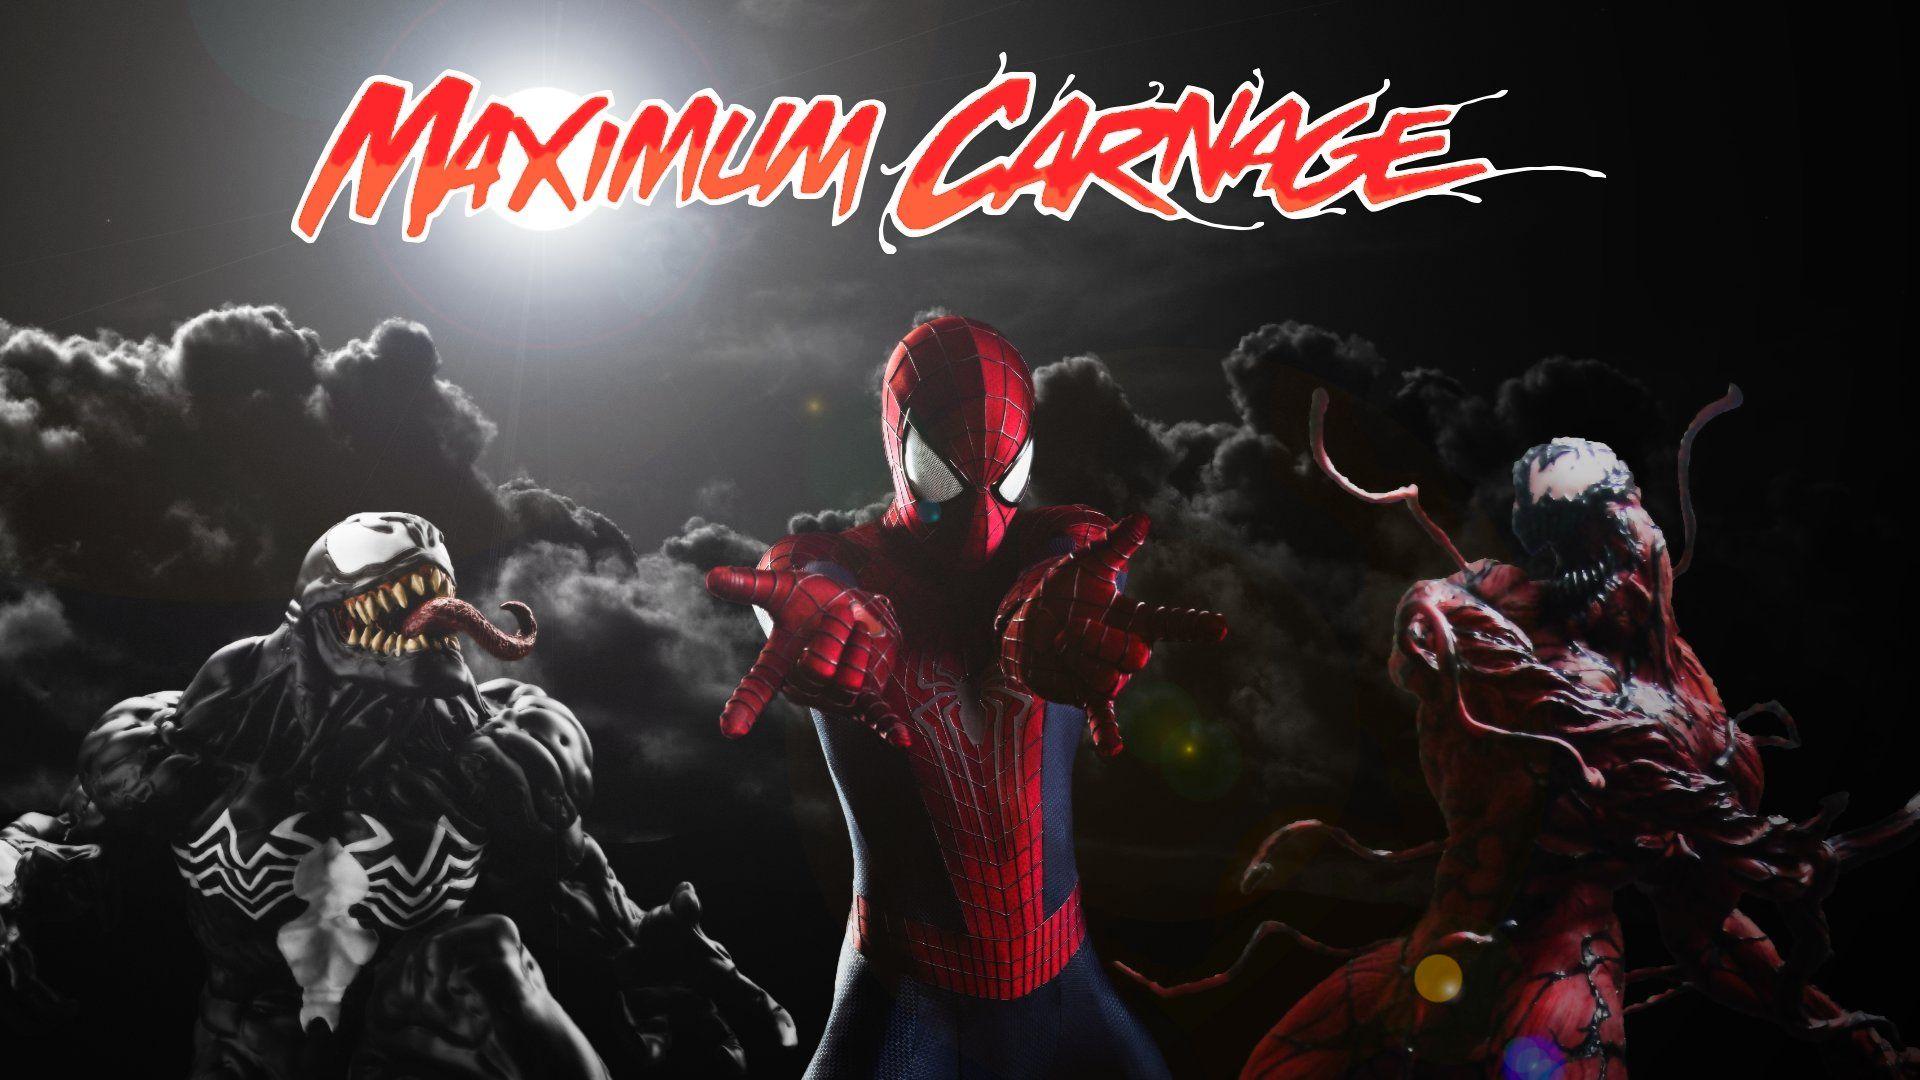 Spider Man Venom Maximum Carnage Scrolling Fighting Action Superhero